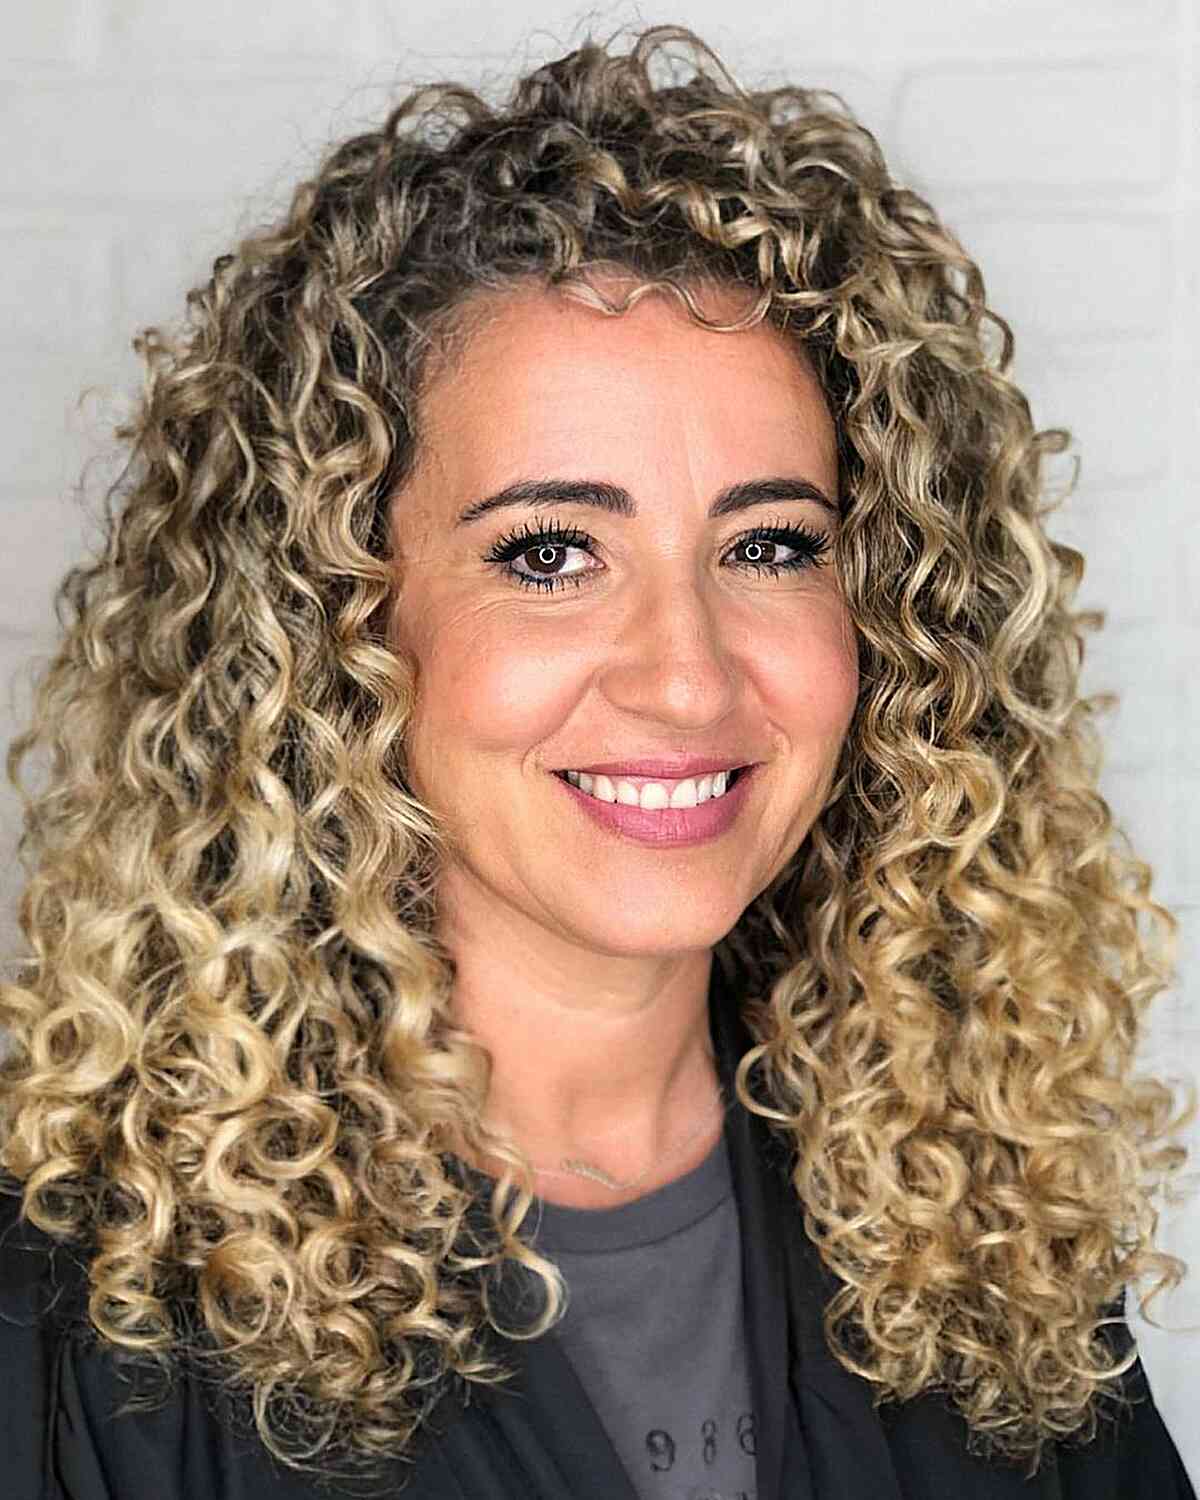 Defined Curls with Volume on Medium-Length Hair